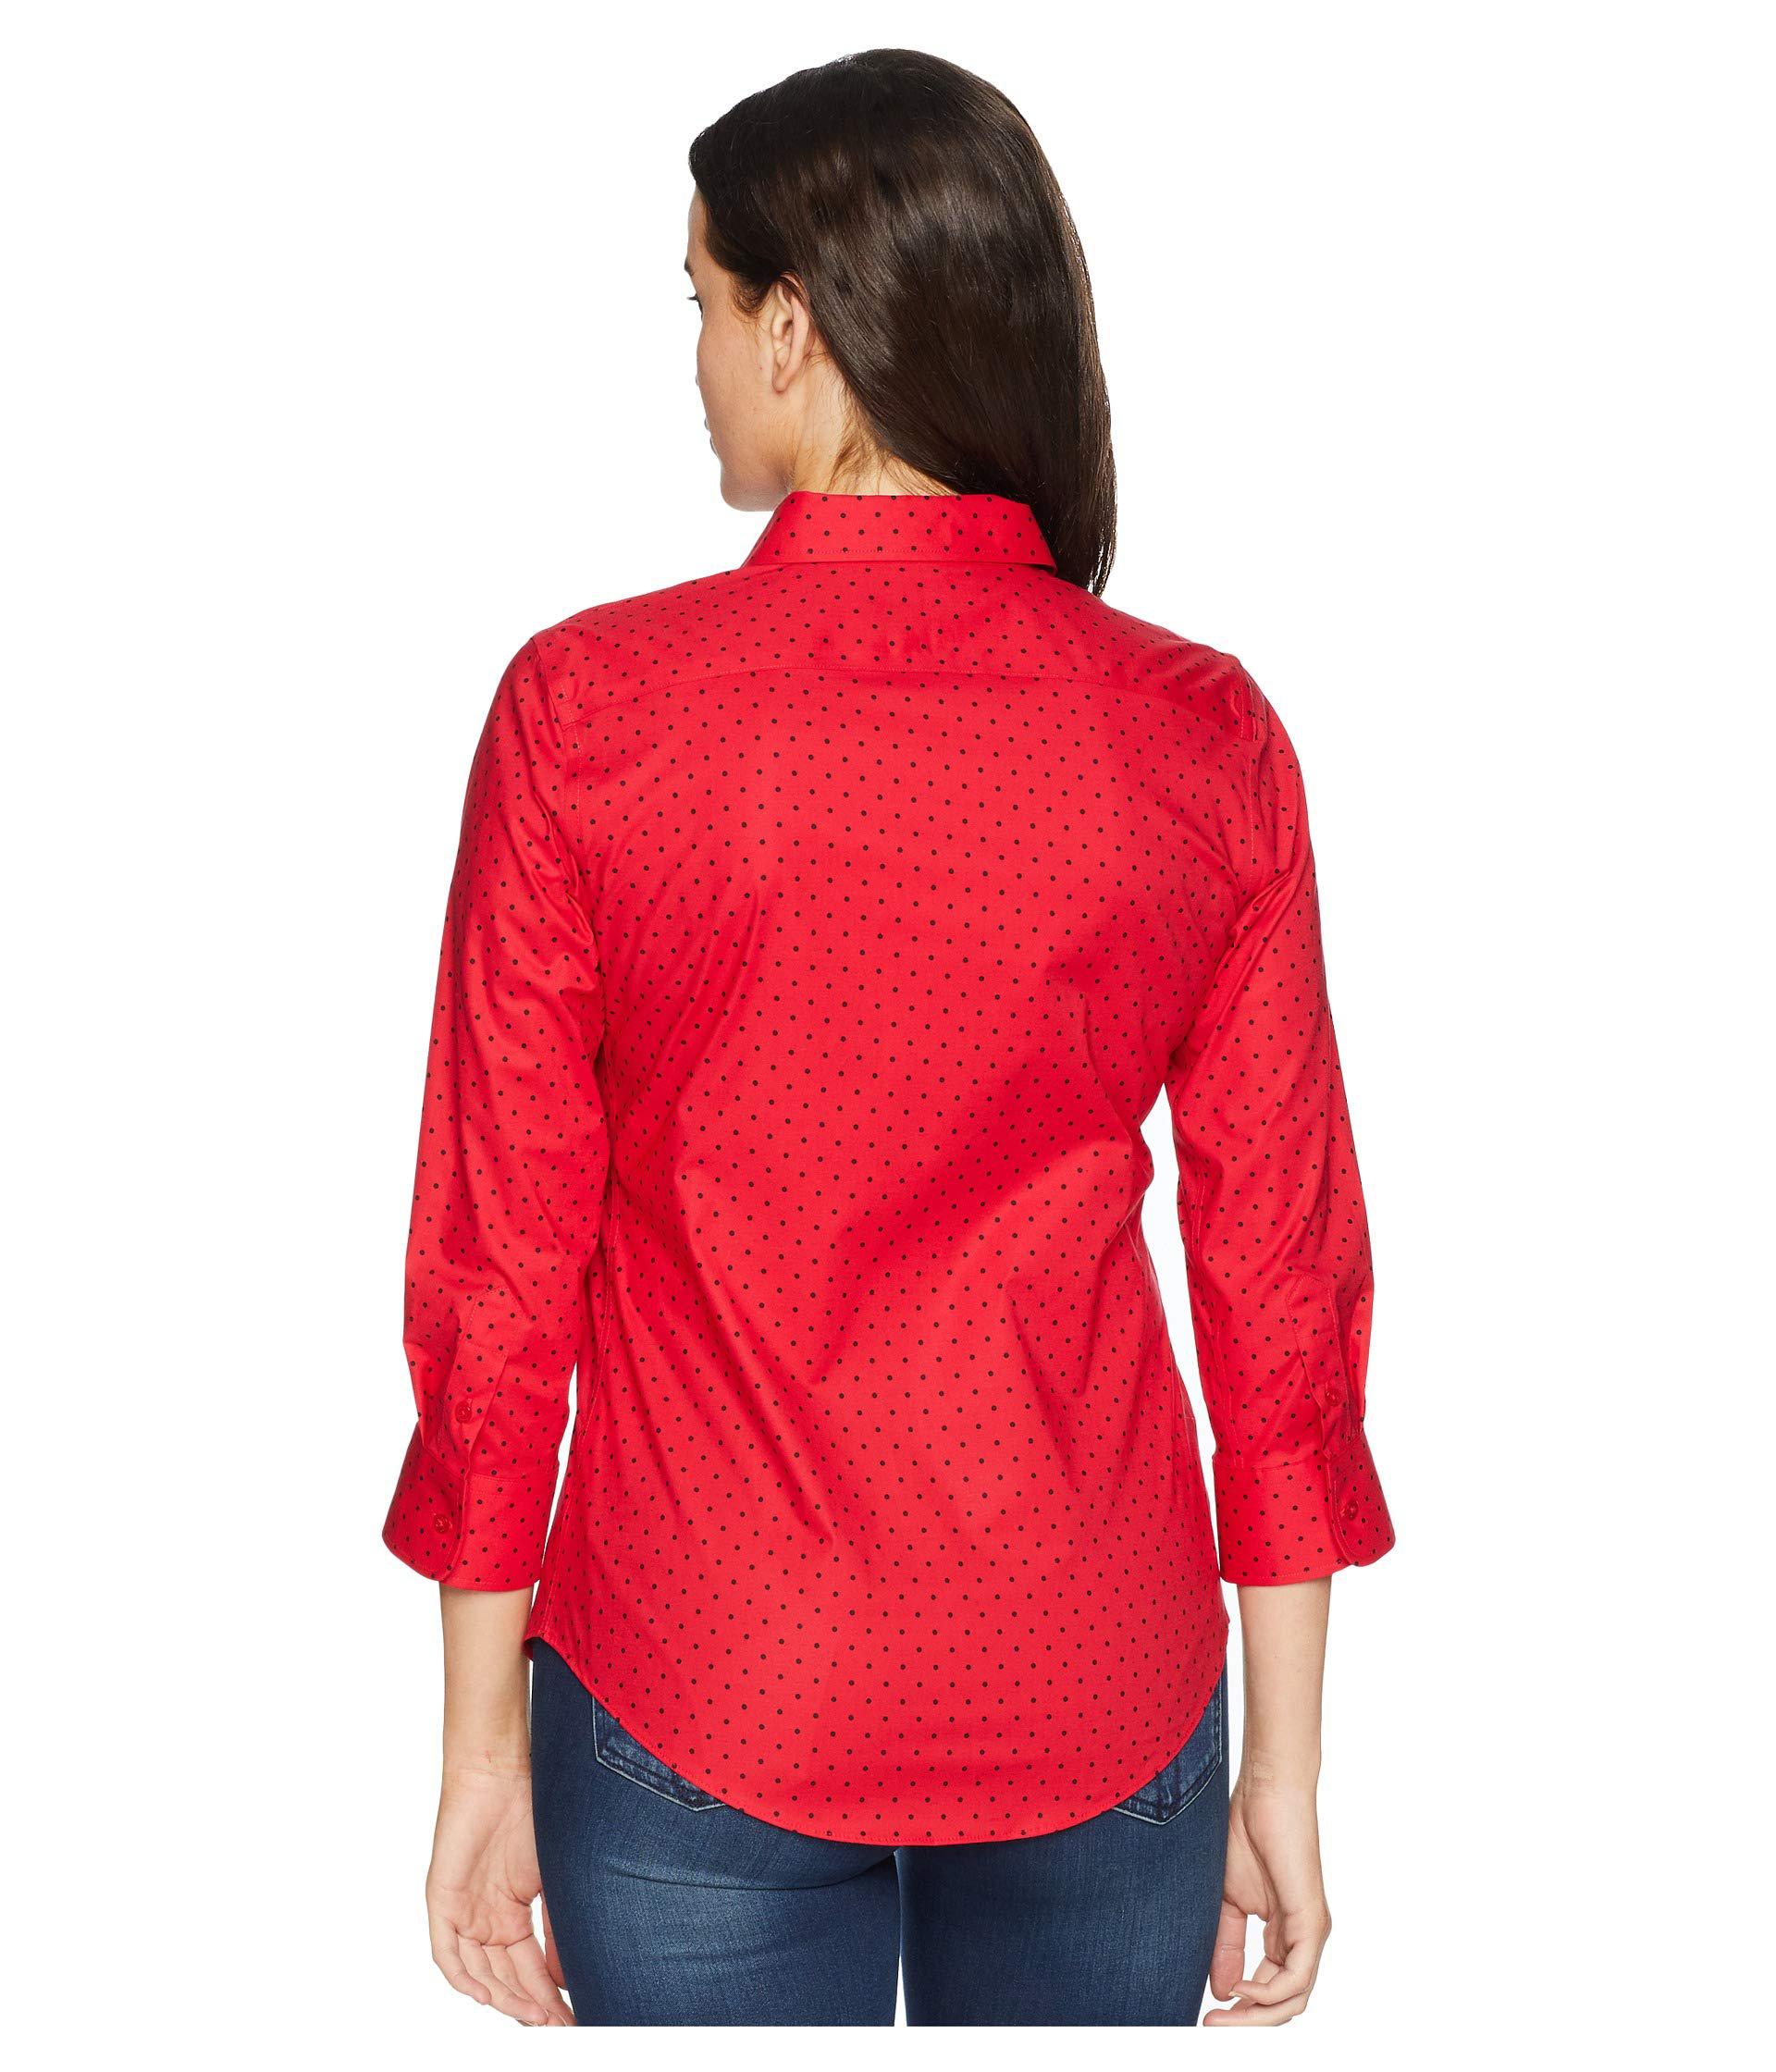 Lauren by Ralph Lauren No-iron Button Down Shirt in Red - Lyst